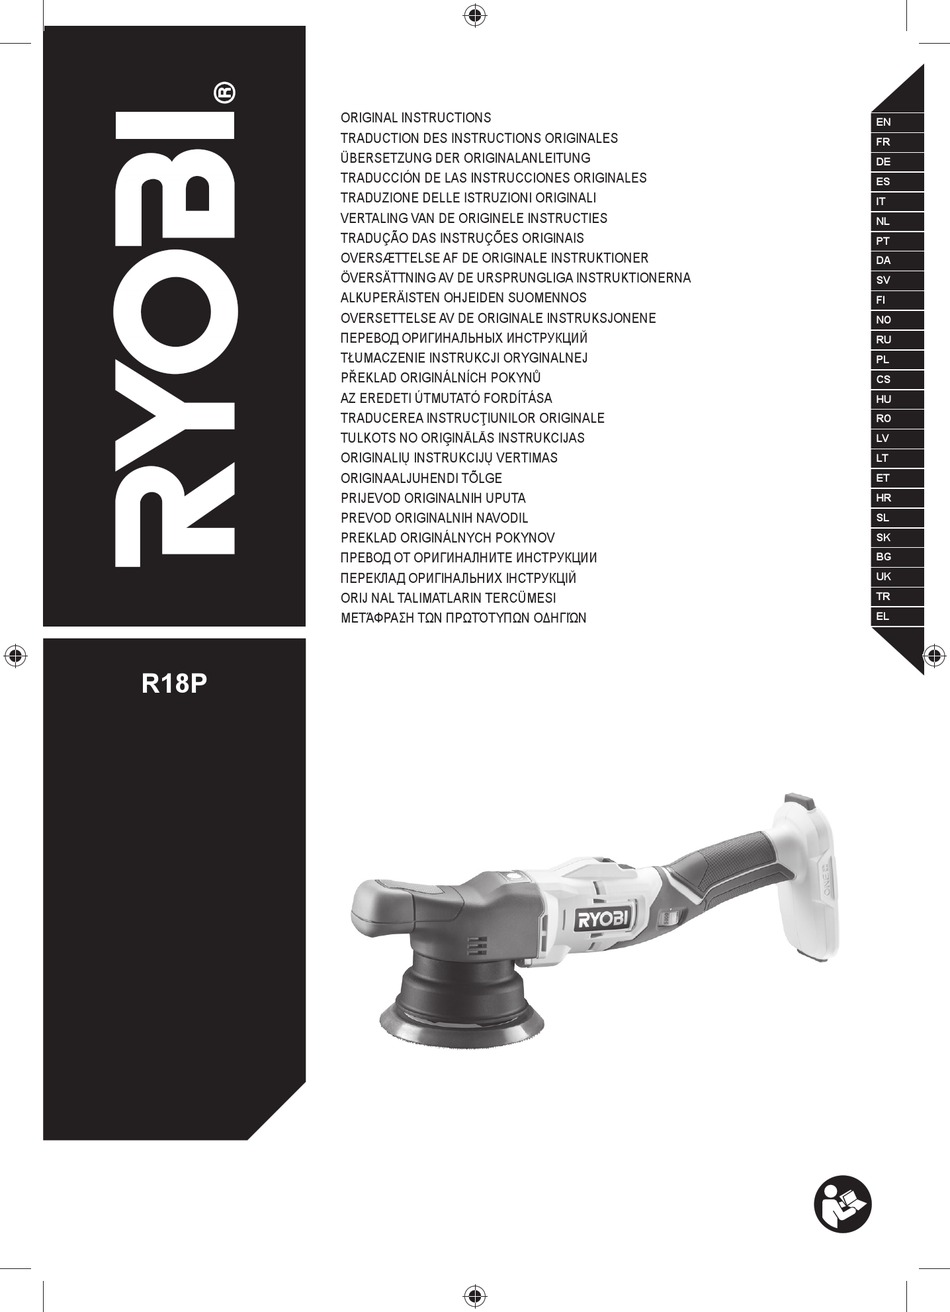 RYOBI R18P ORIGINAL INSTRUCTIONS MANUAL Pdf Download | ManualsLib